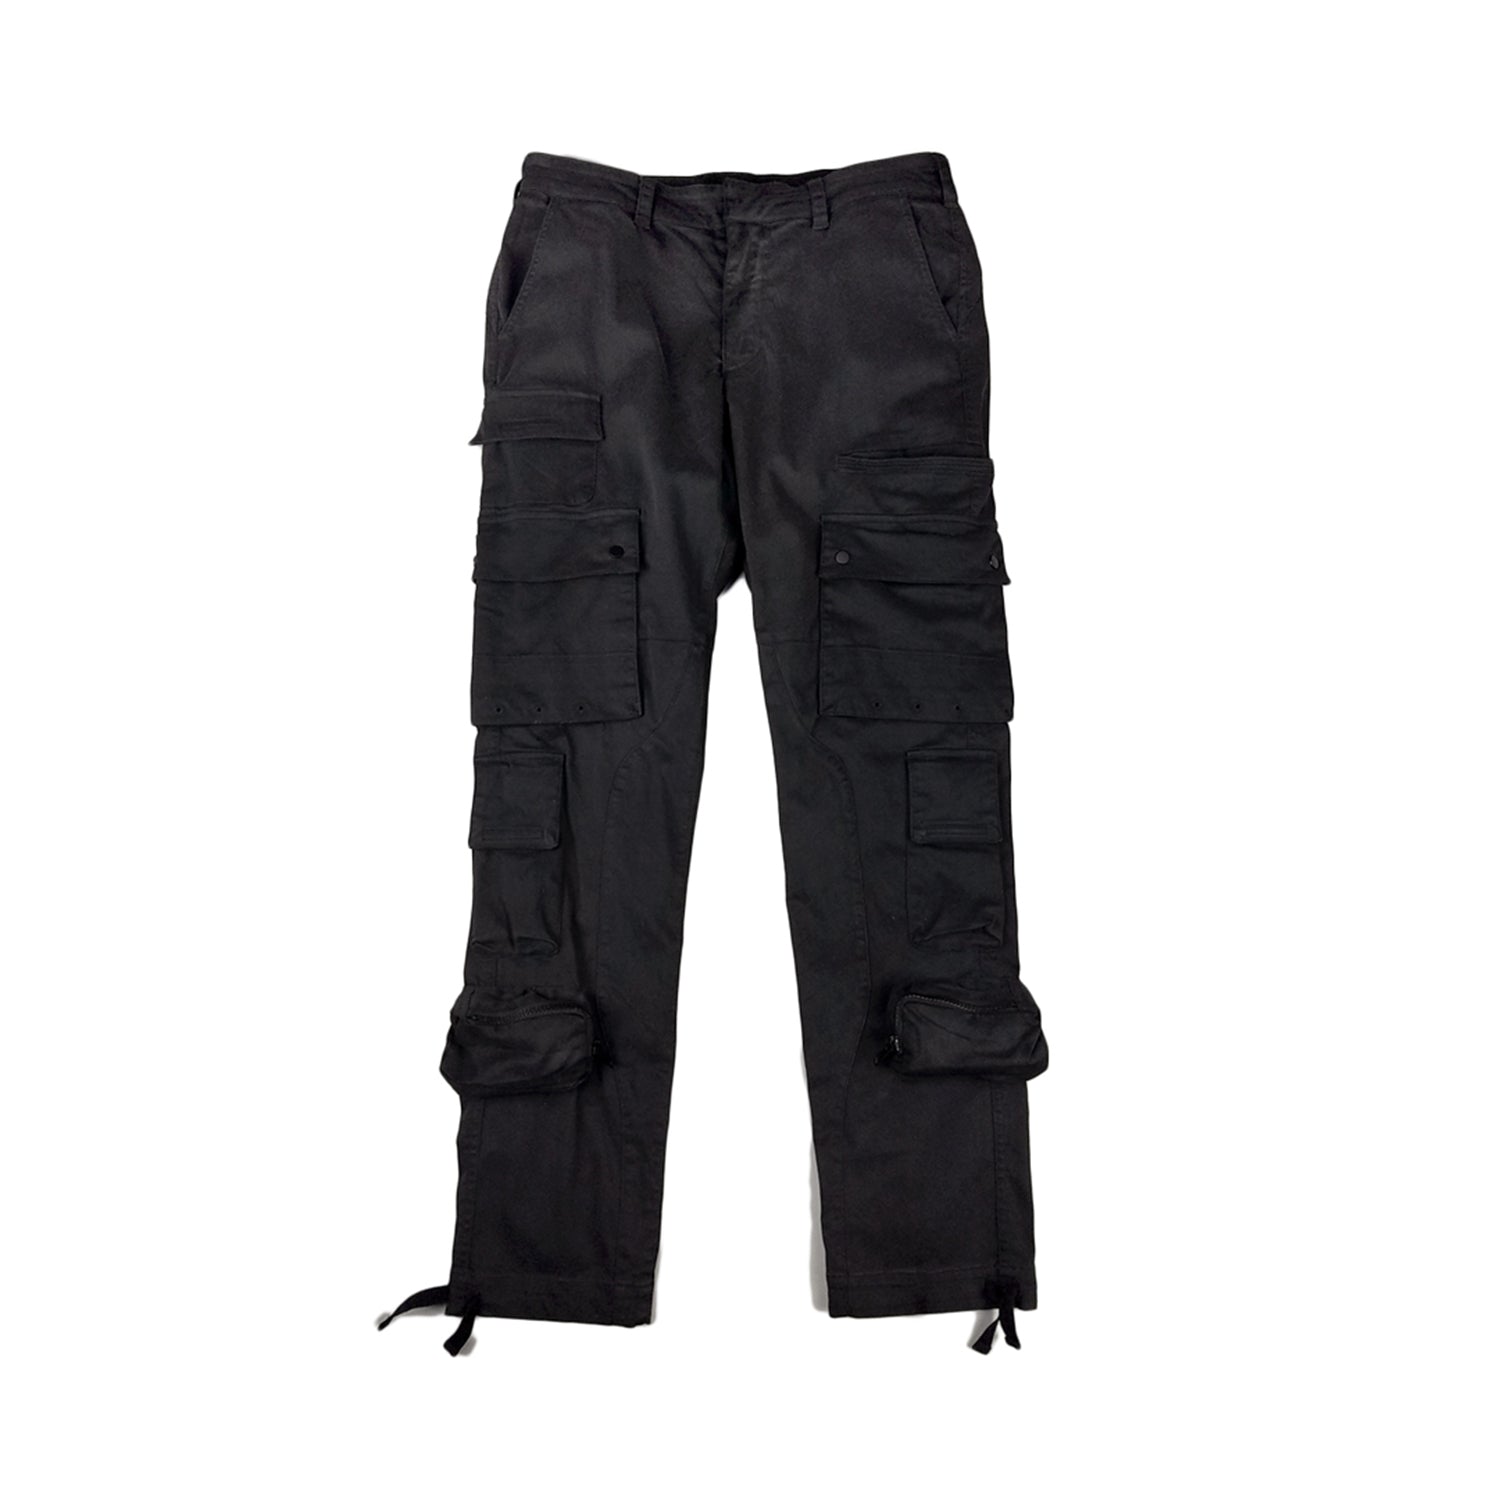 Black cargo pants